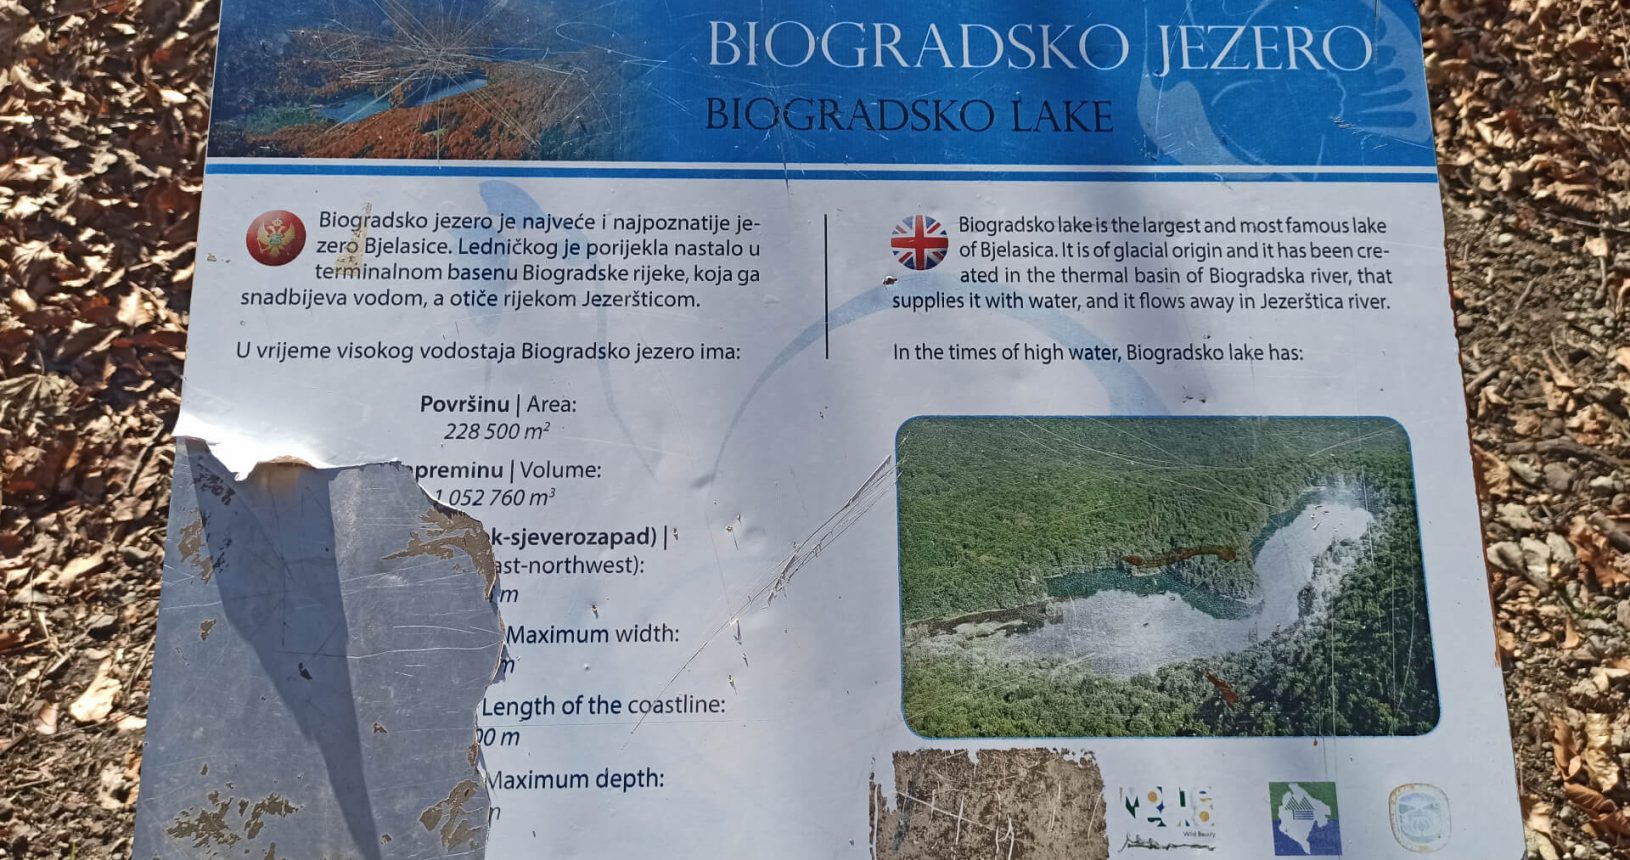 National Park Biogradska Gora Biogradsko jezero sign